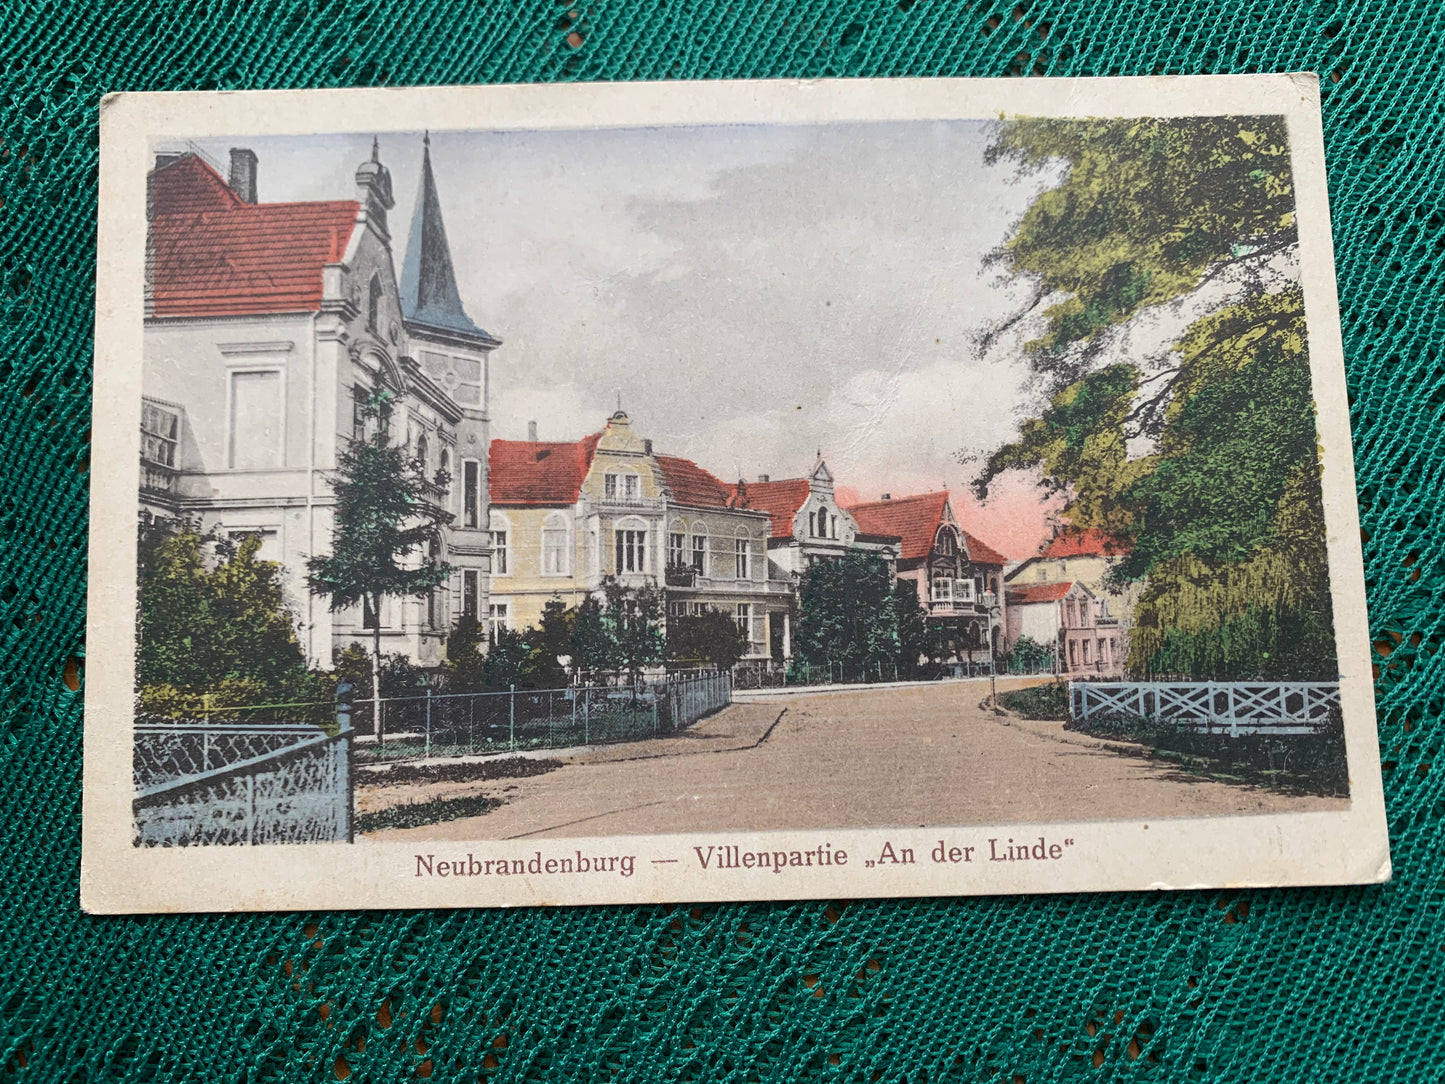 Old postcard - Neubrandenburg - Villenpartie „An der Linde" - Germany - early 1900's